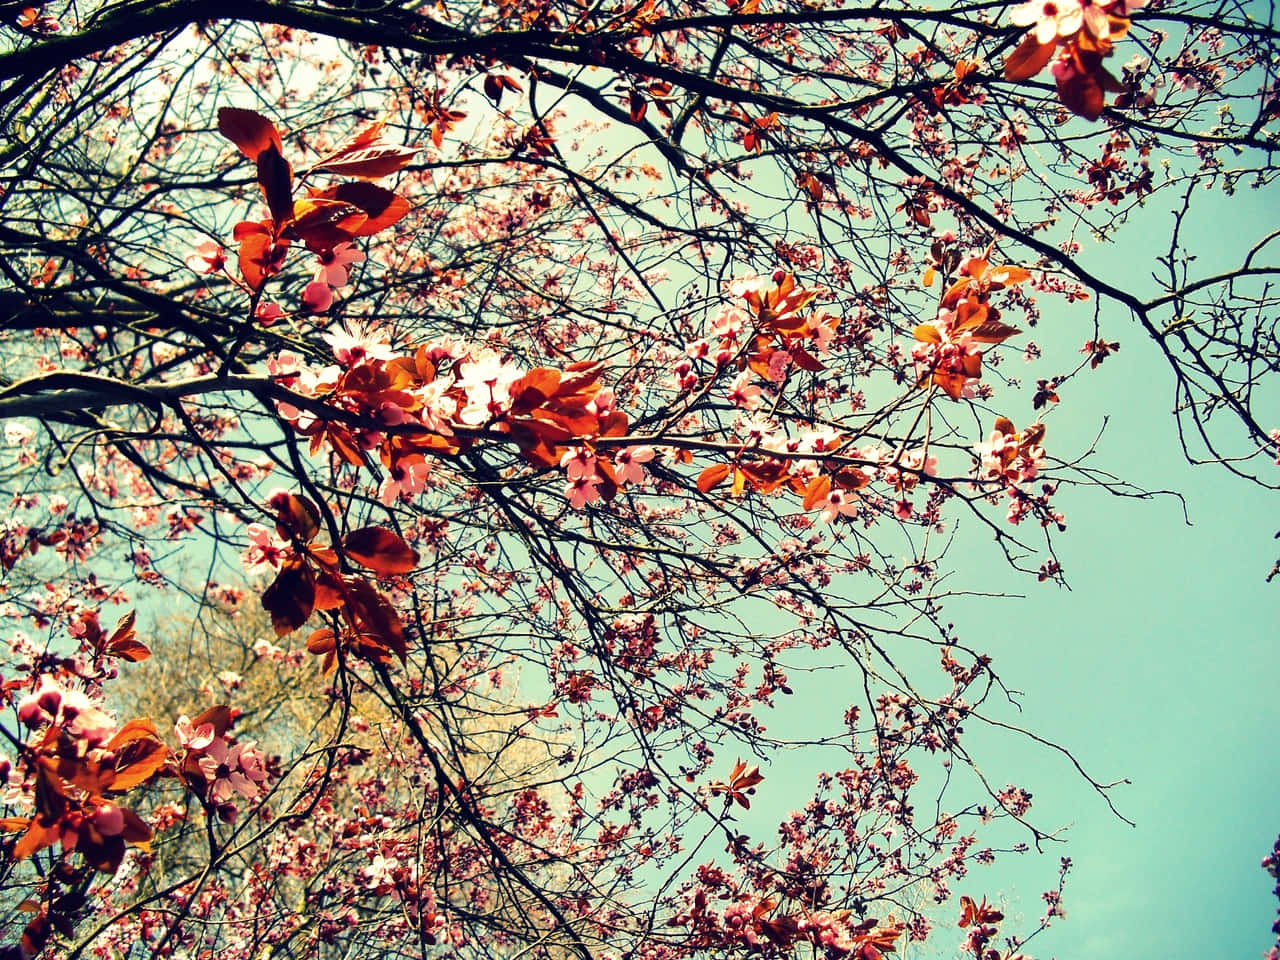 Captivating Floral Arrangement in a Vintage Tumblr-style Background